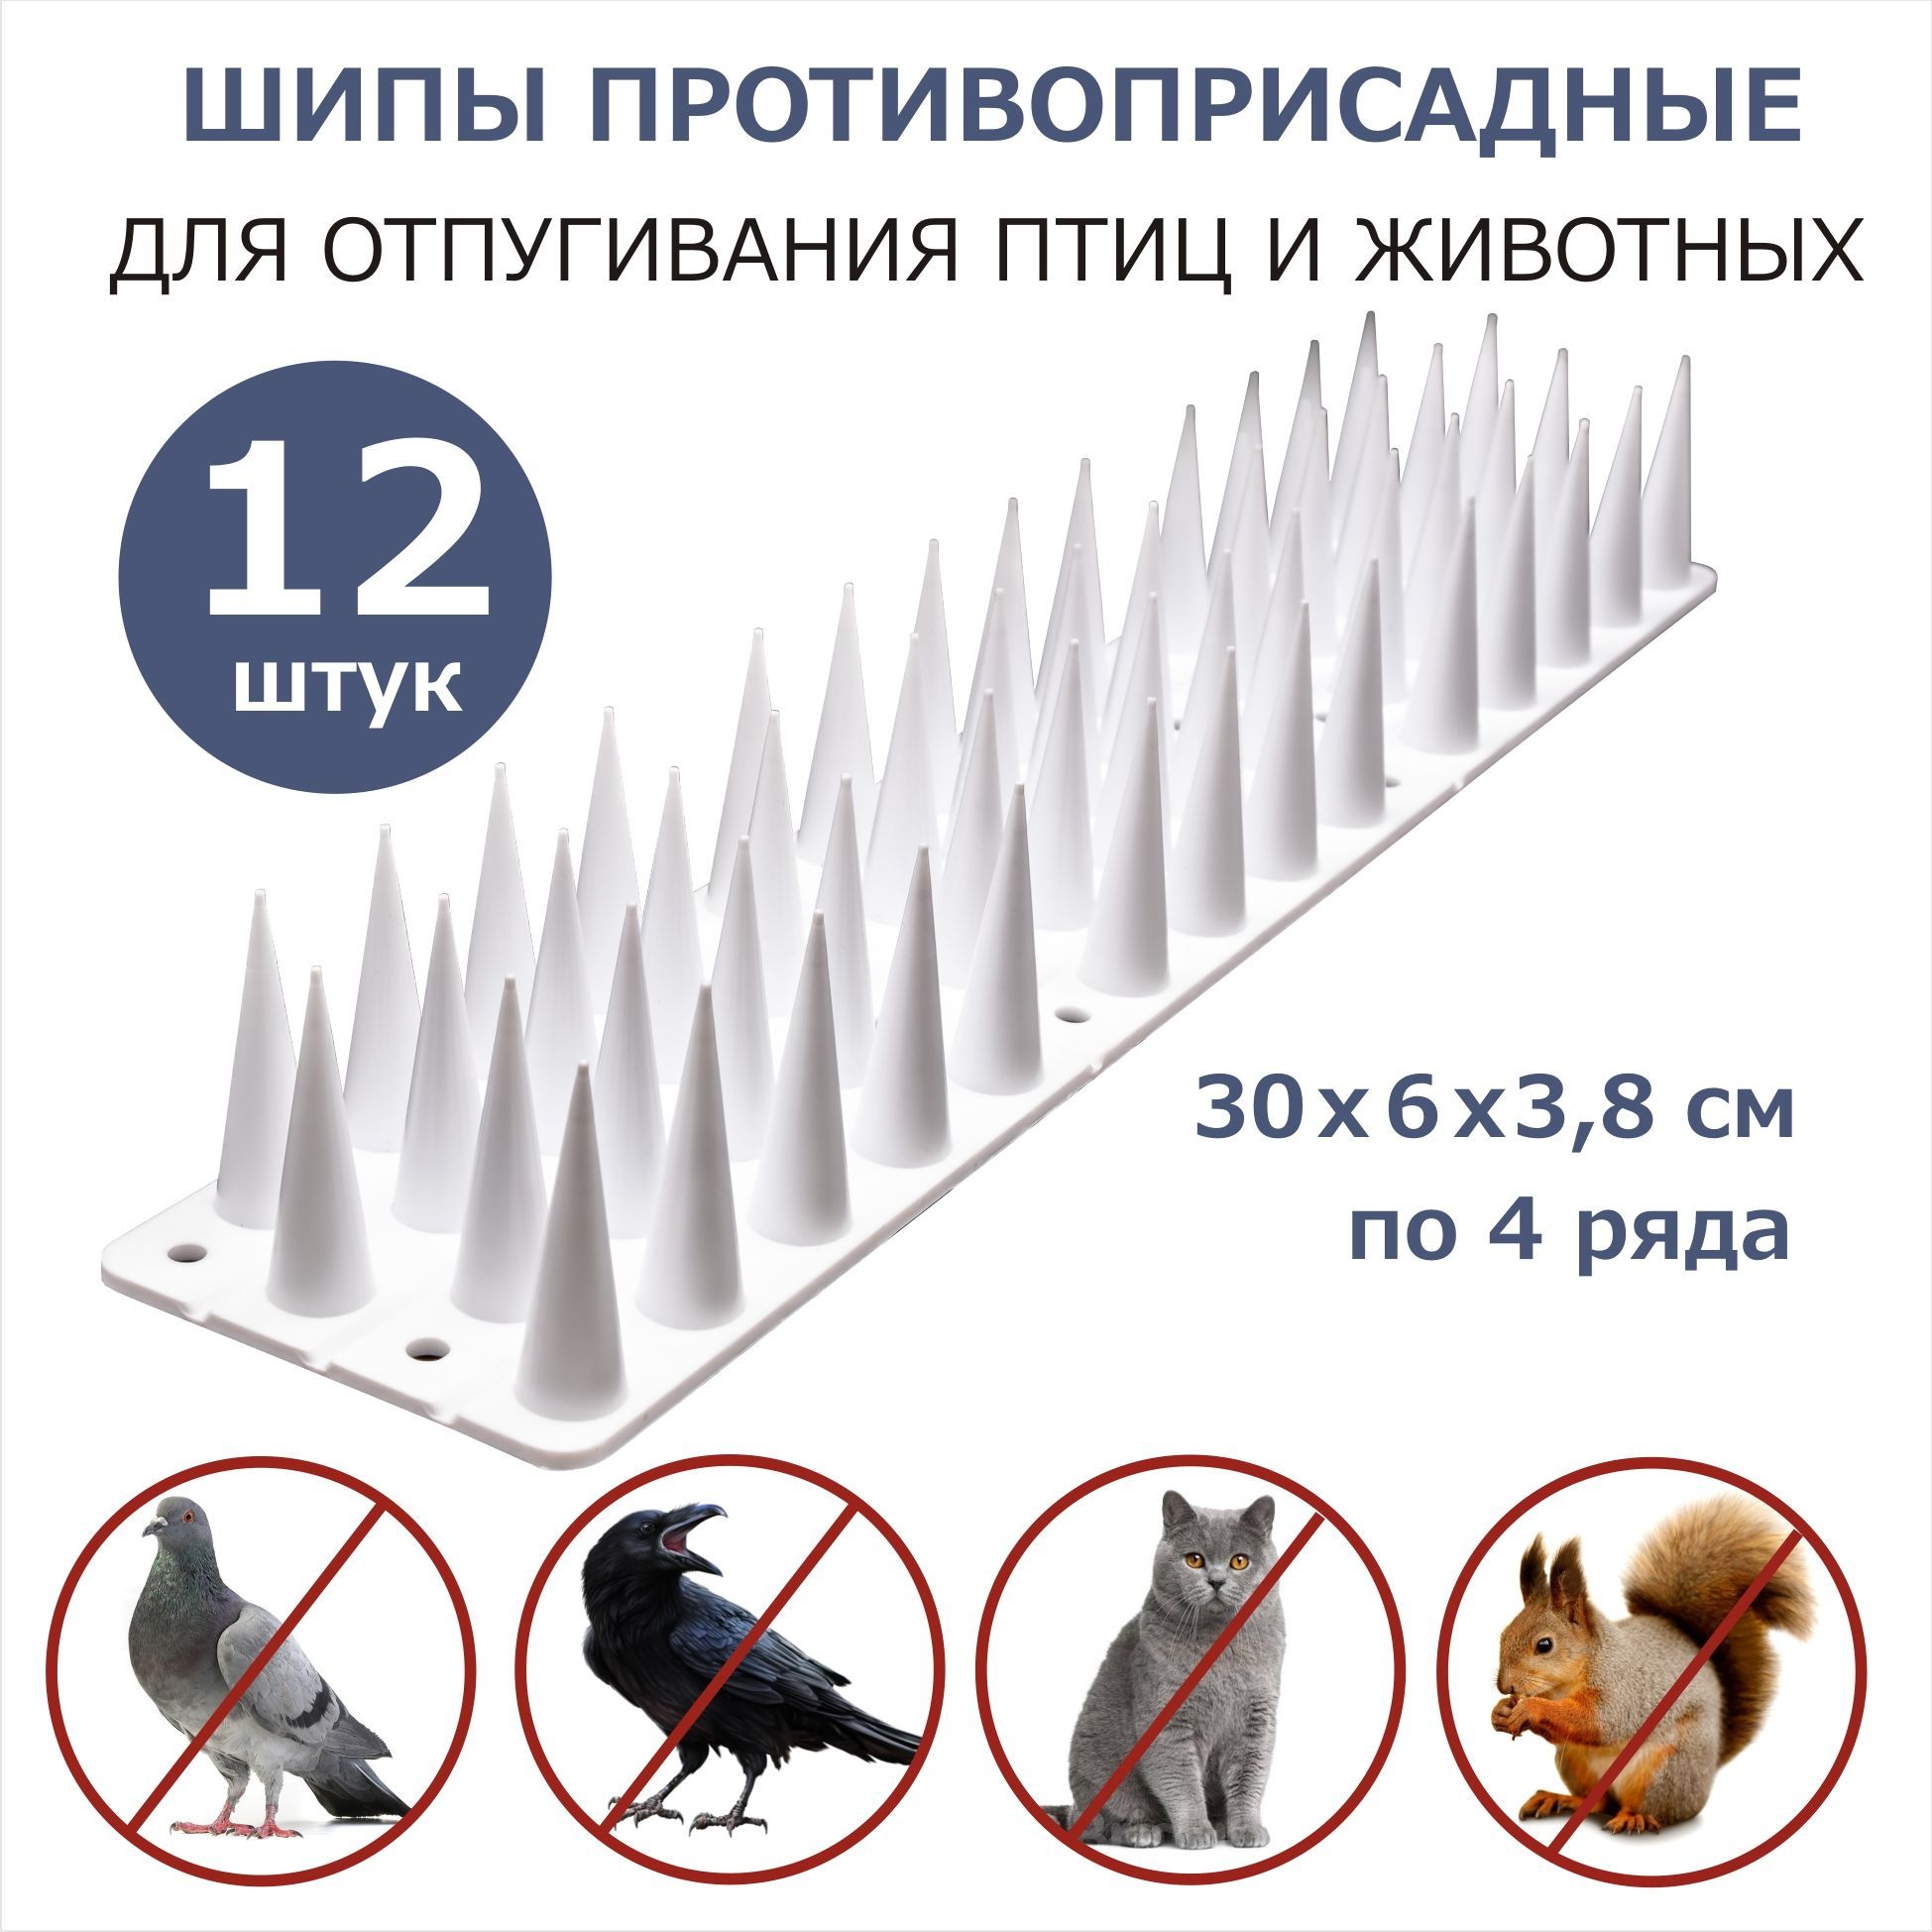 Шипы для защиты от птиц ЛУК, пластмассовые белые, 300х60х38 мм, 12 шт